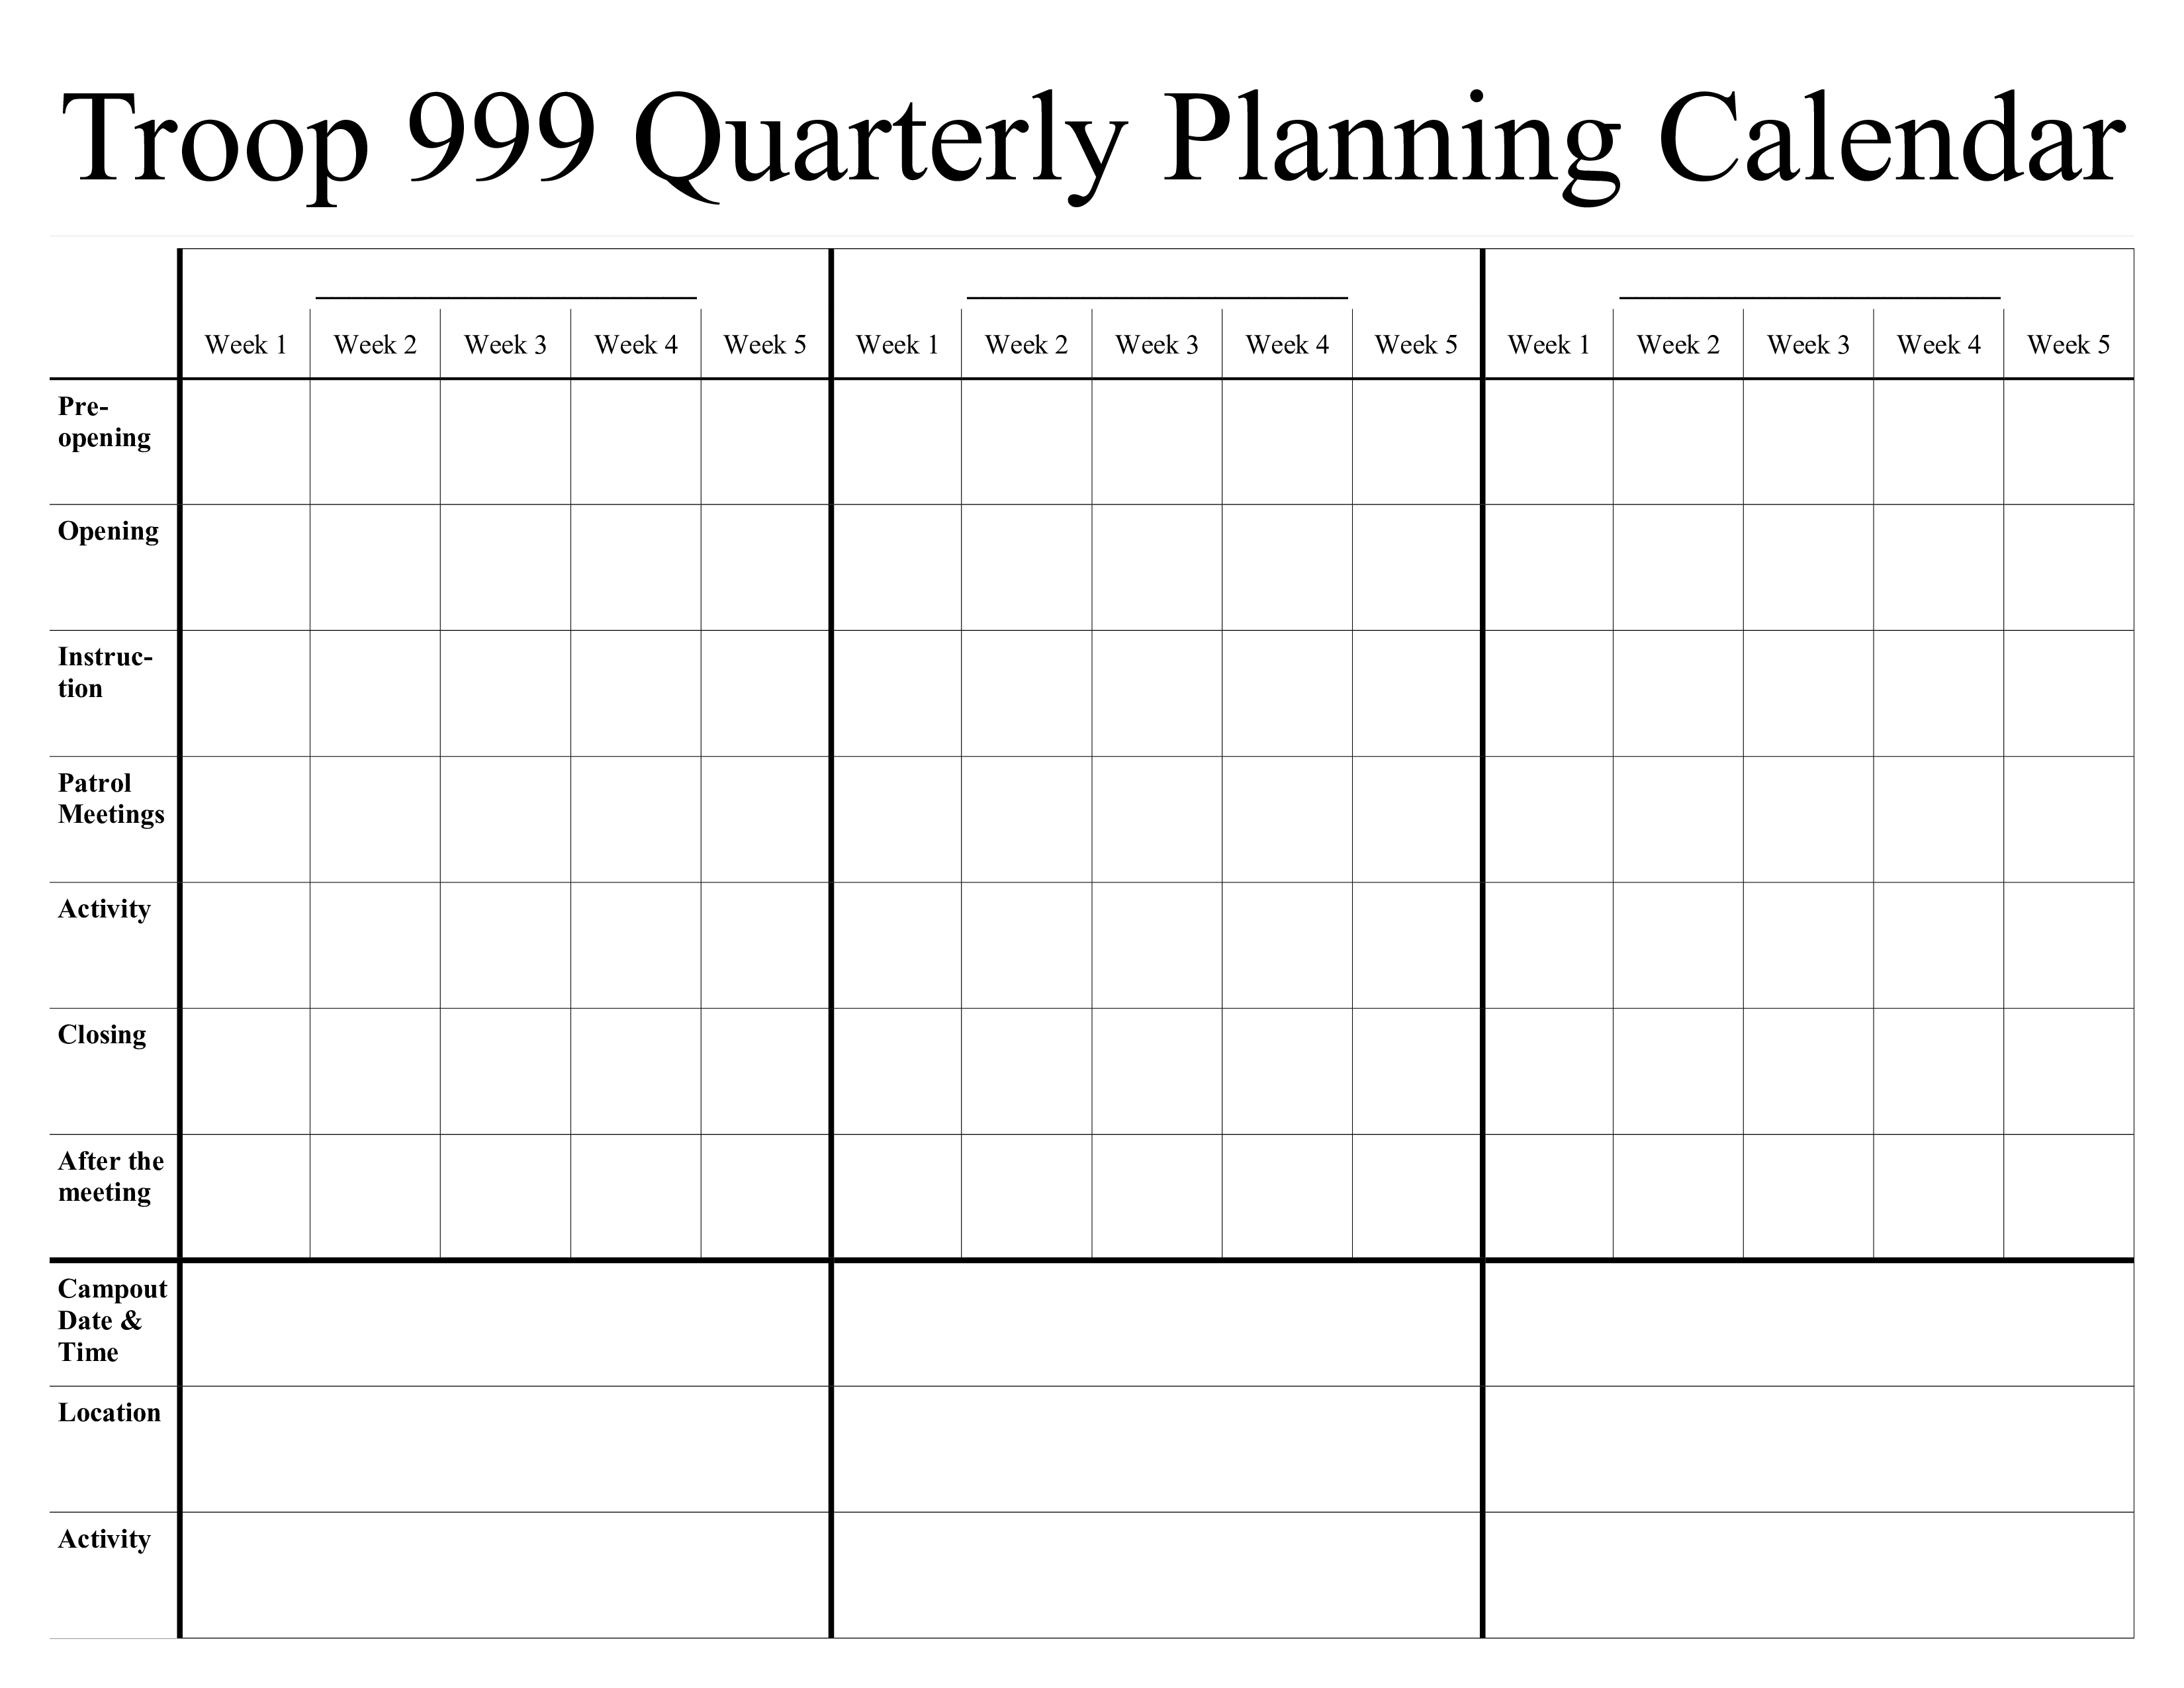 Quarterly Planning Calendar Templates at